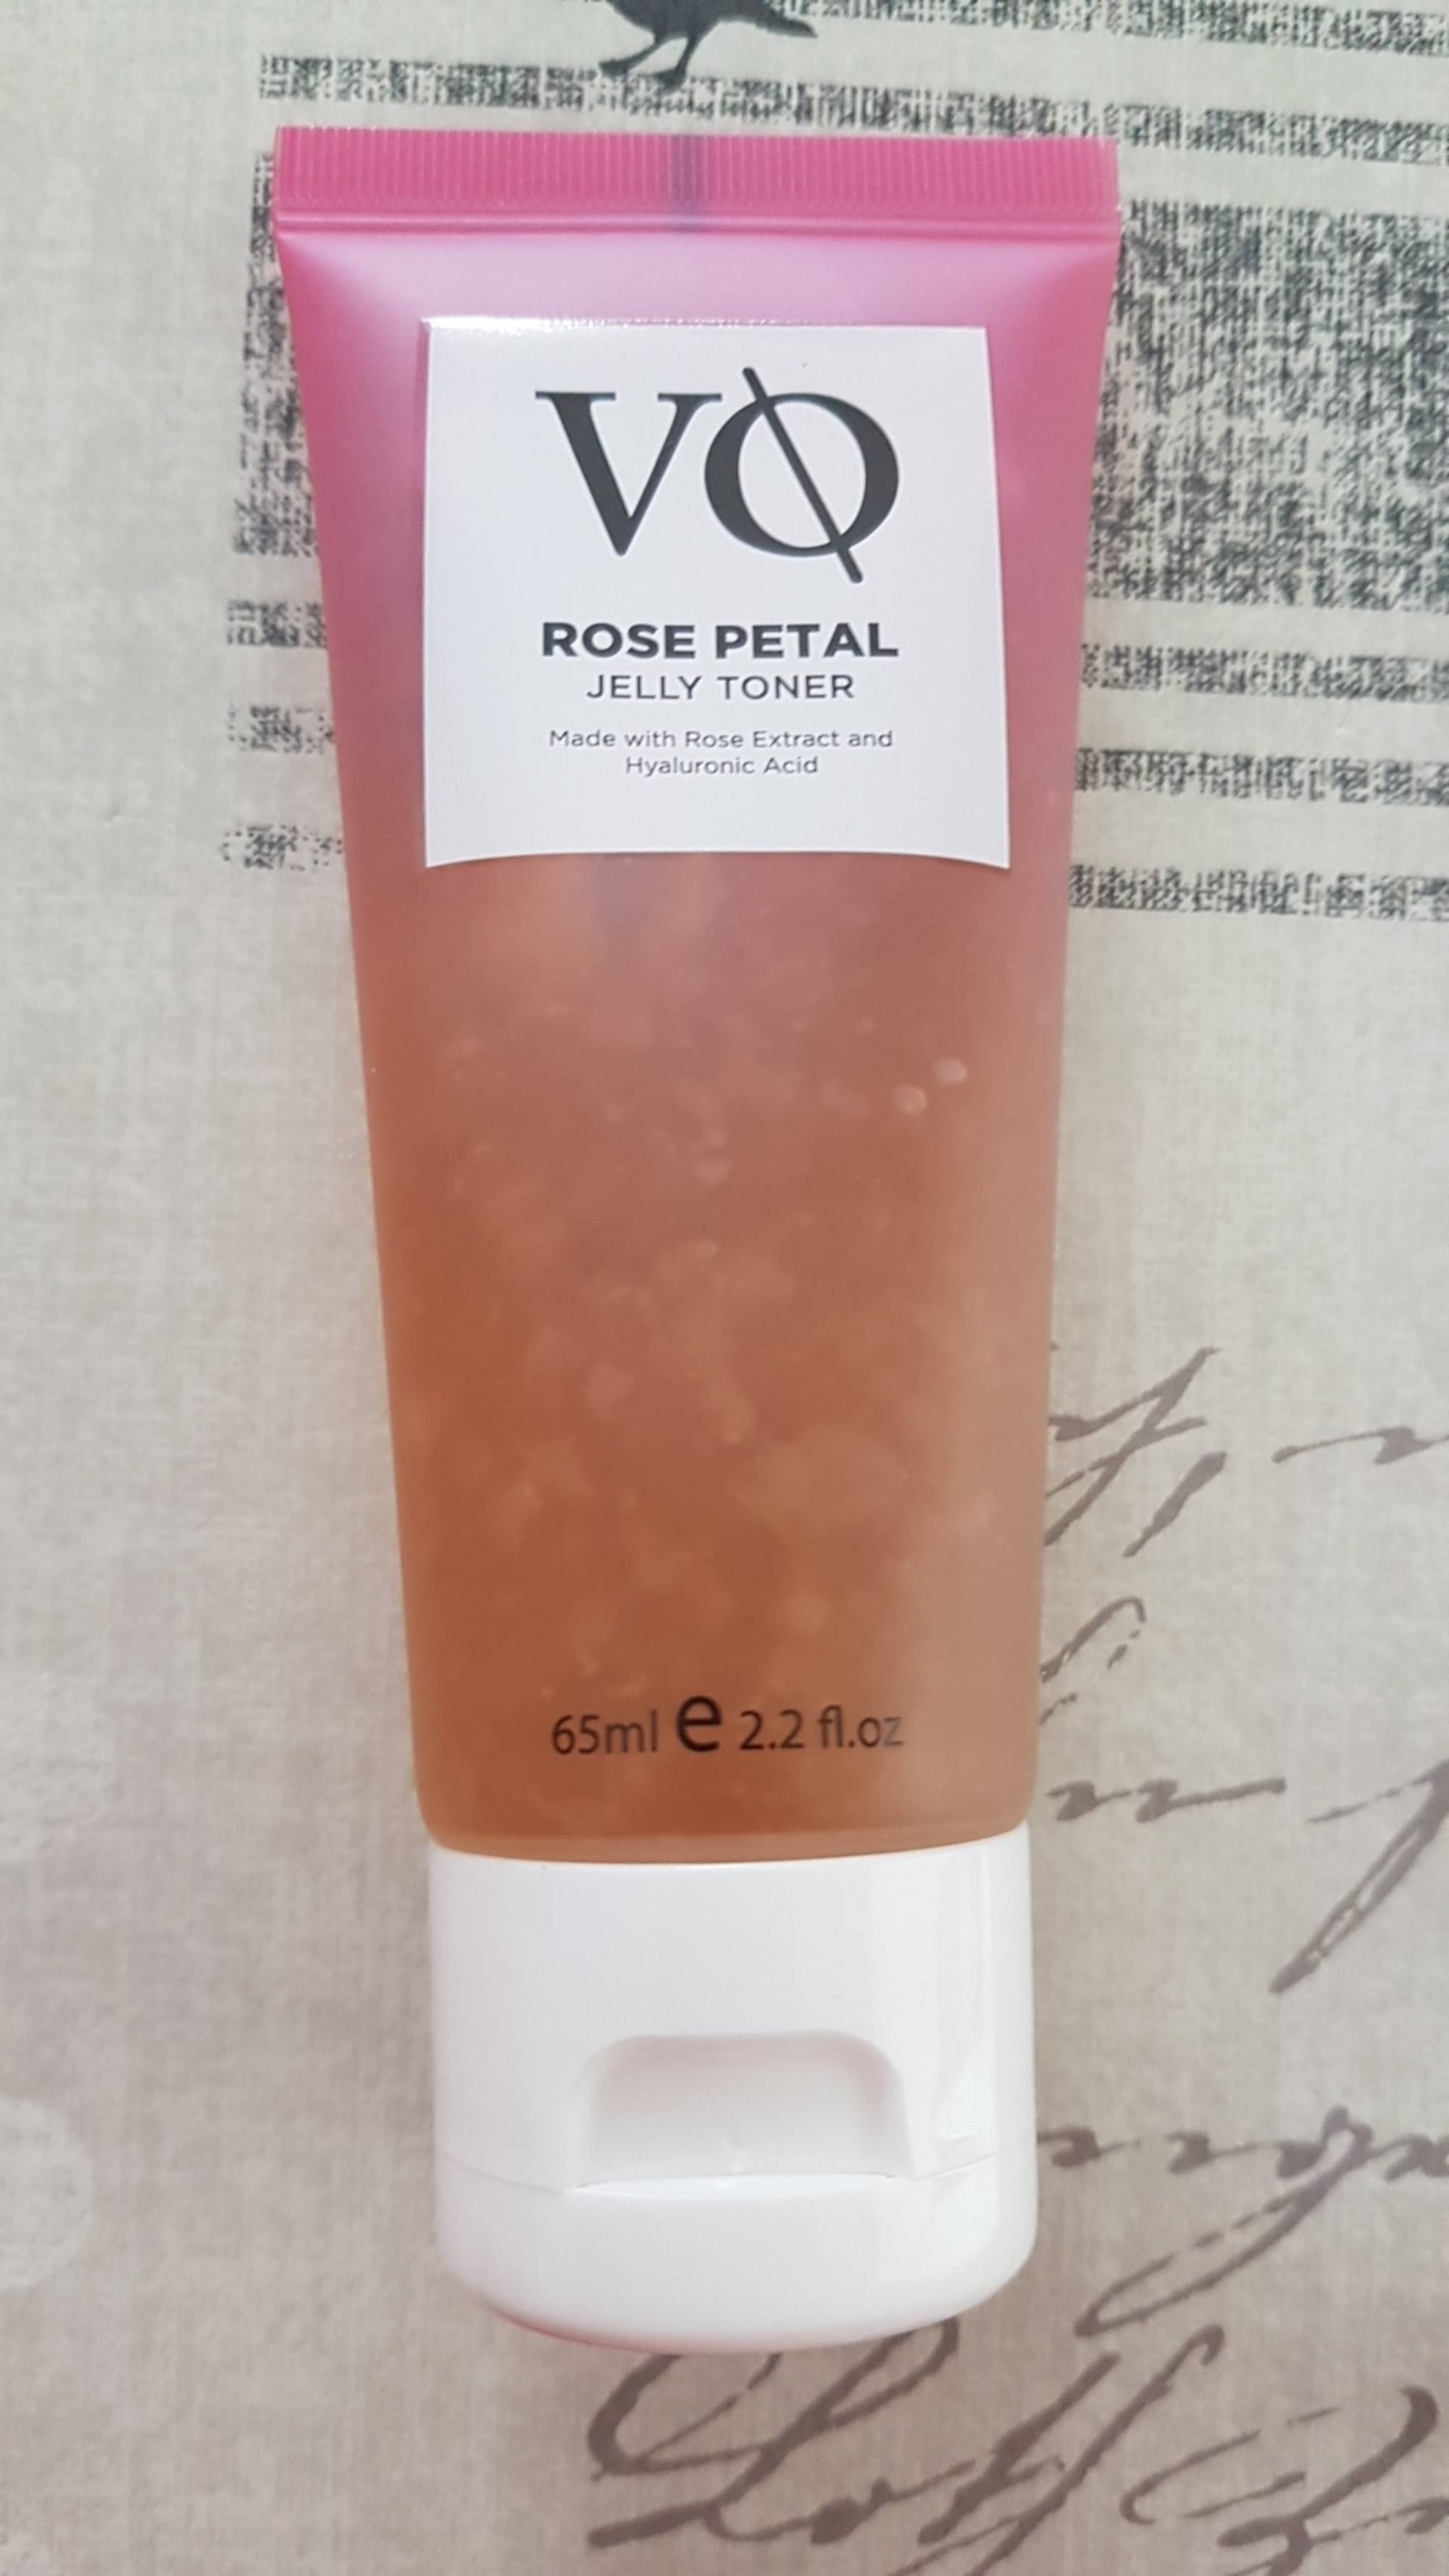 VQ - Rose petal - Jelly toner